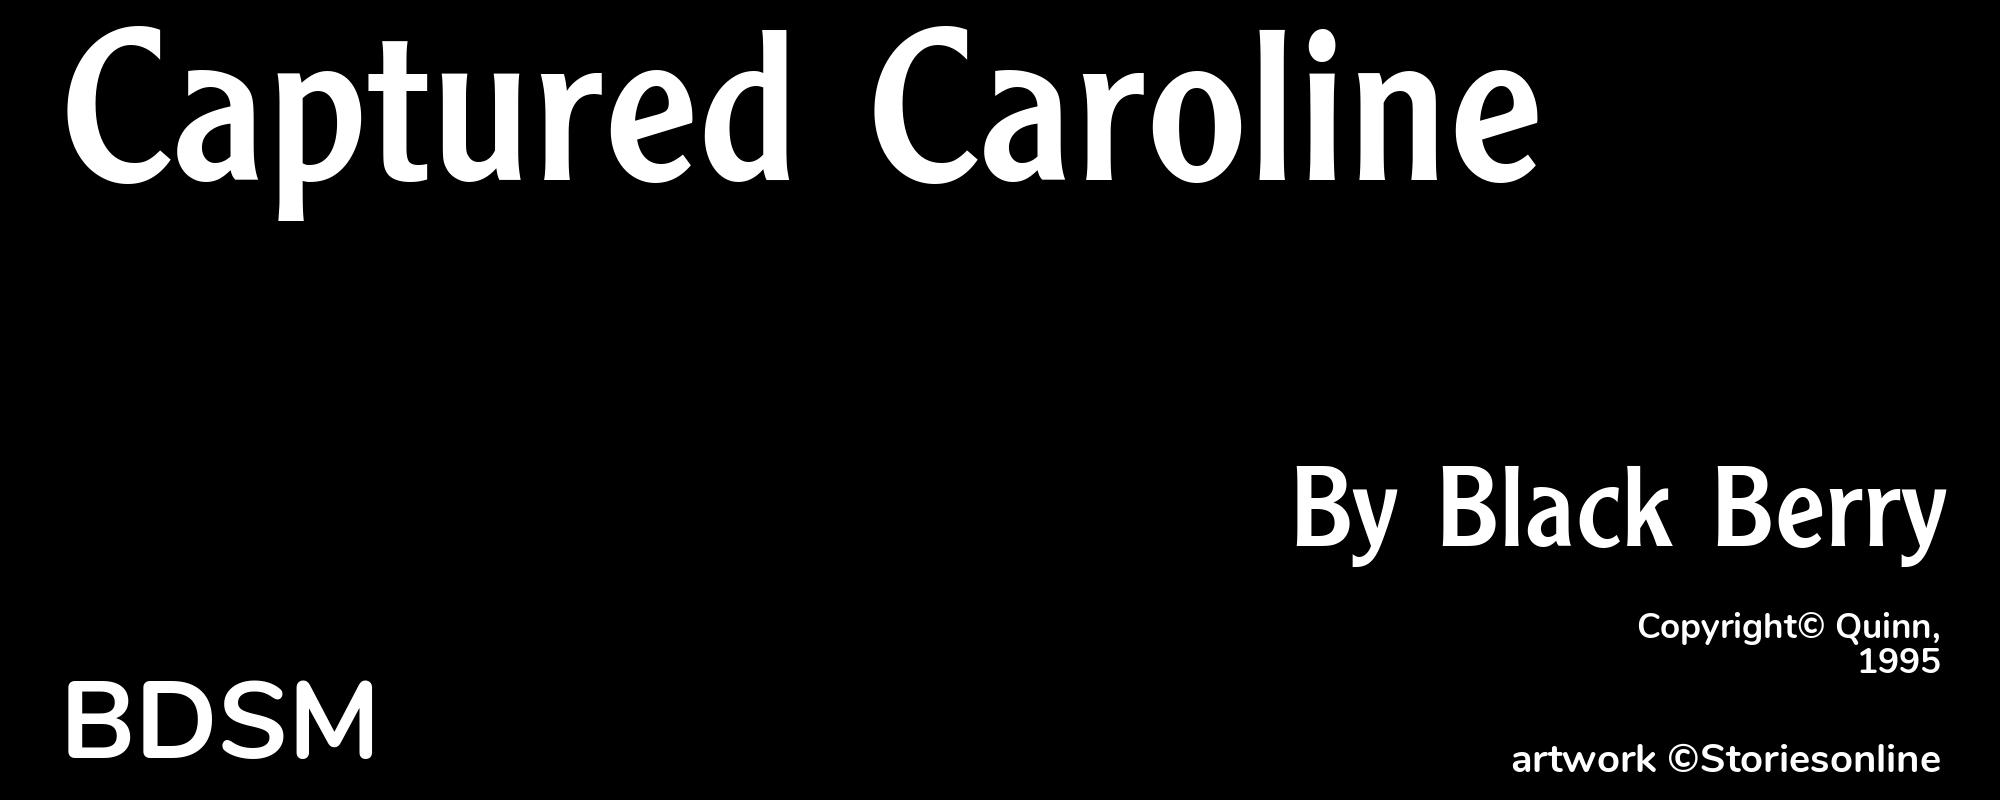 Captured Caroline - Cover